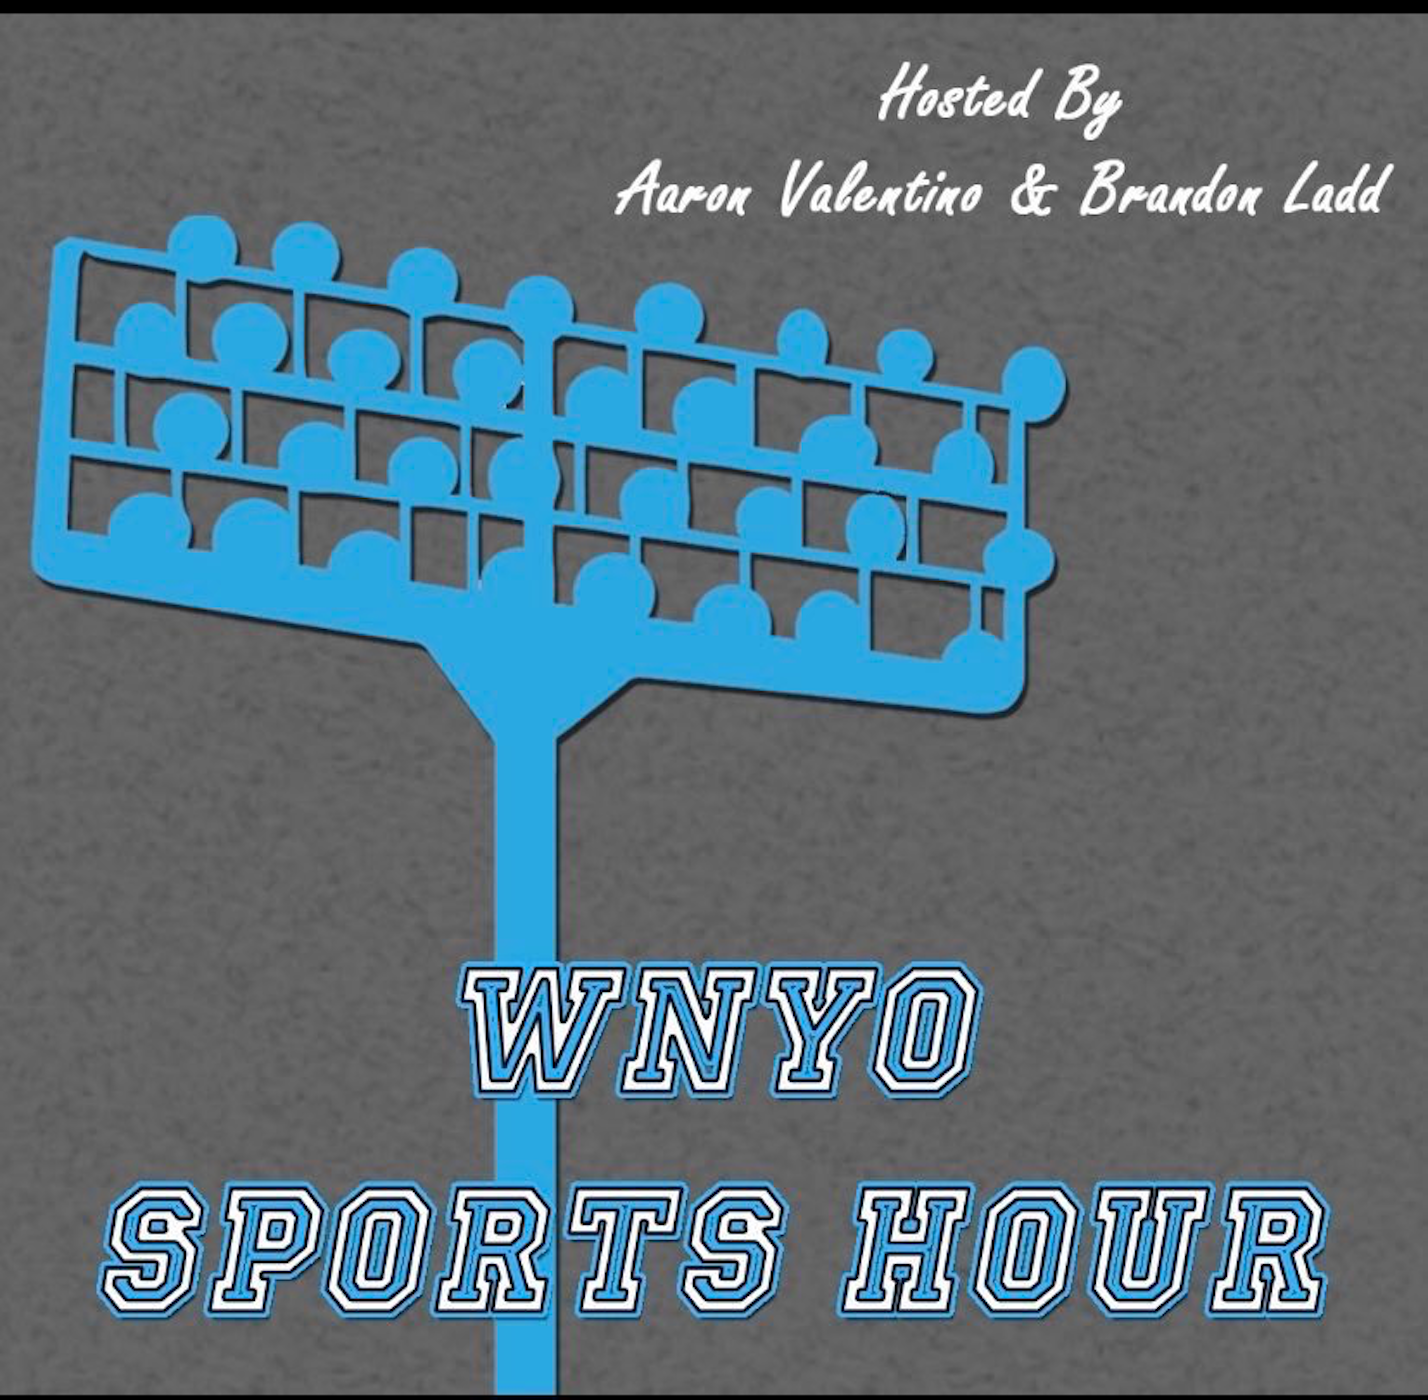 WNYO Sports Hour Episode 115: Palatsky Joins the Show